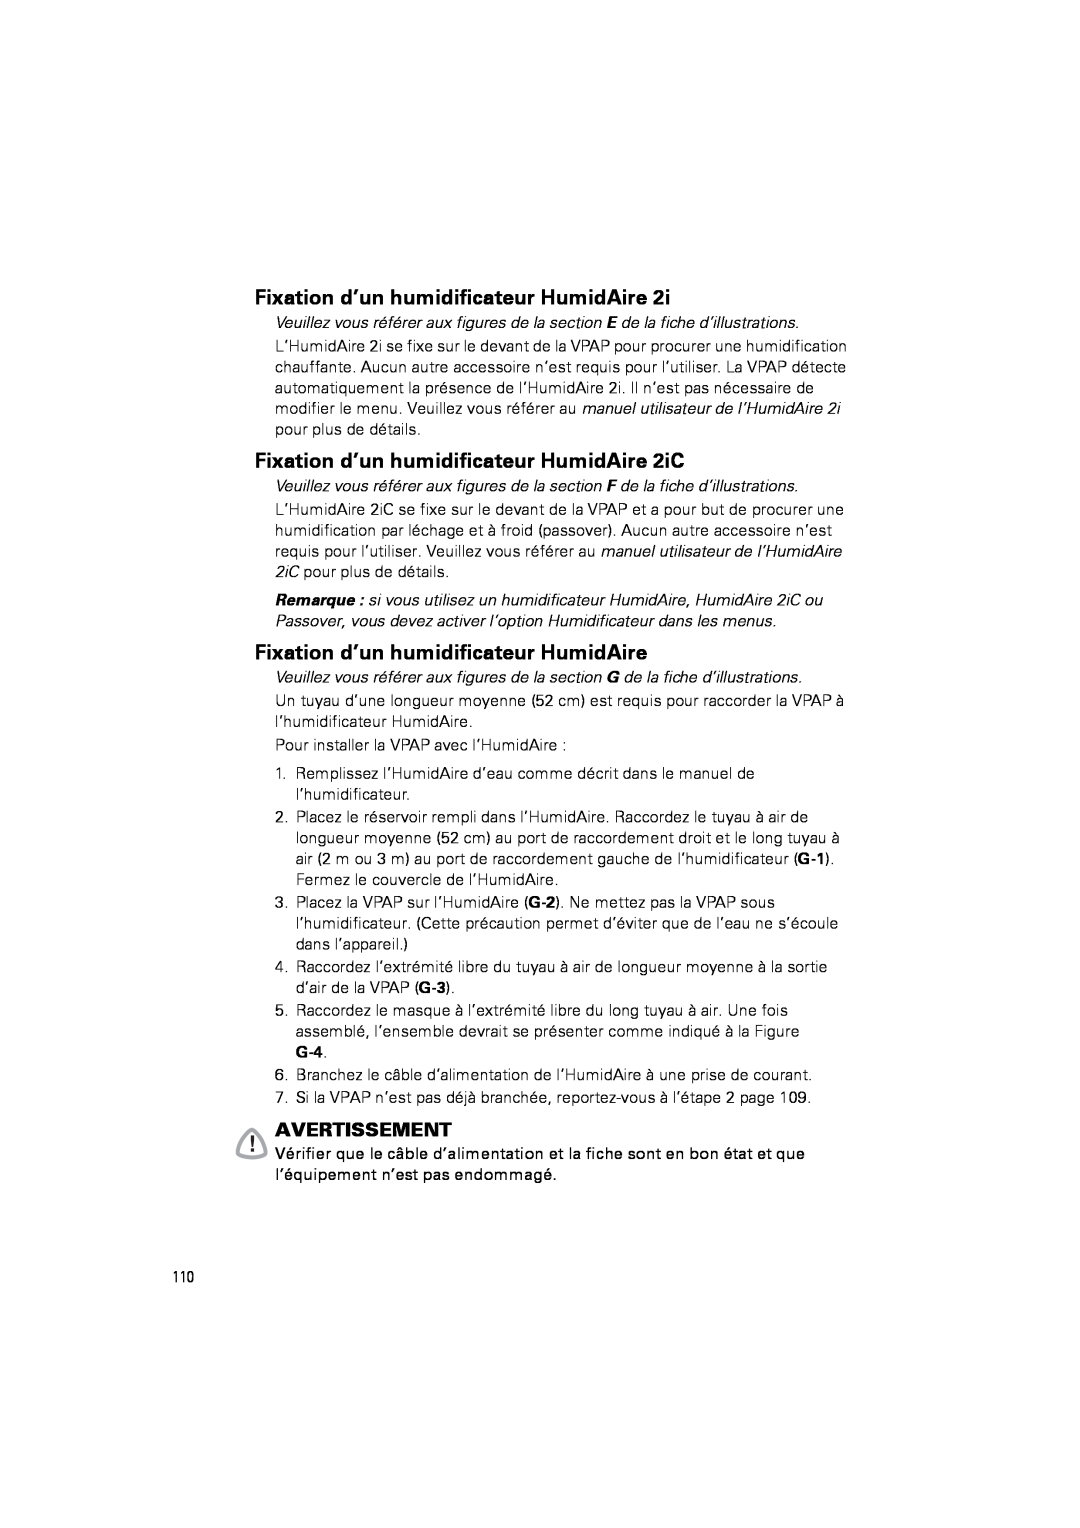 ResMed III & III ST user manual Fixation d’un humidificateur HumidAire 2iC, Avertissement 